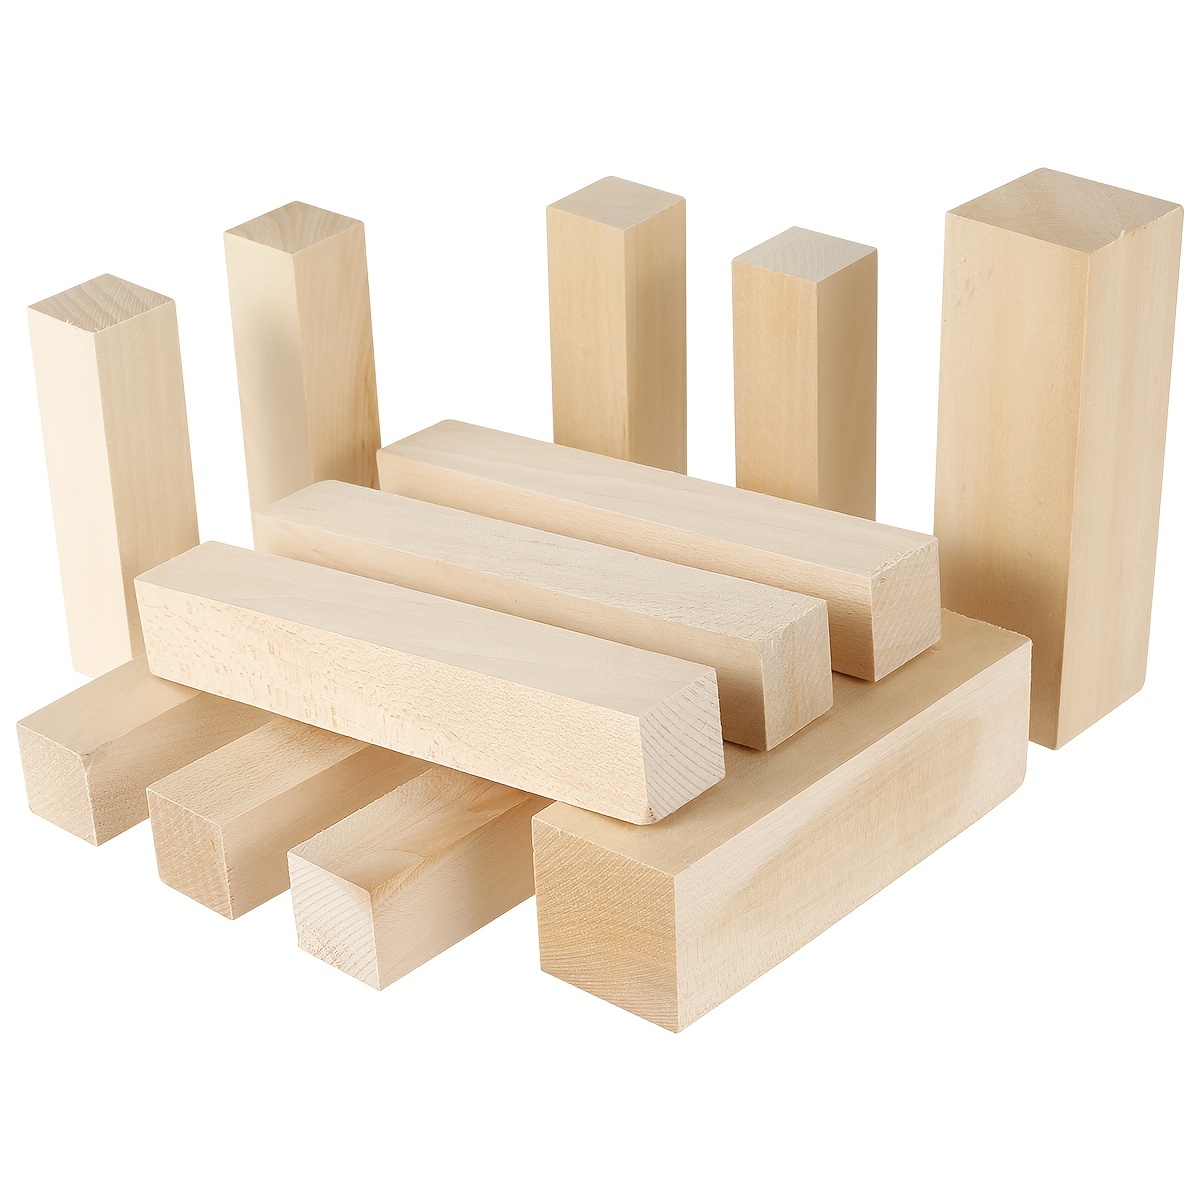 3 x 4 x 12 Balsa Wood Block